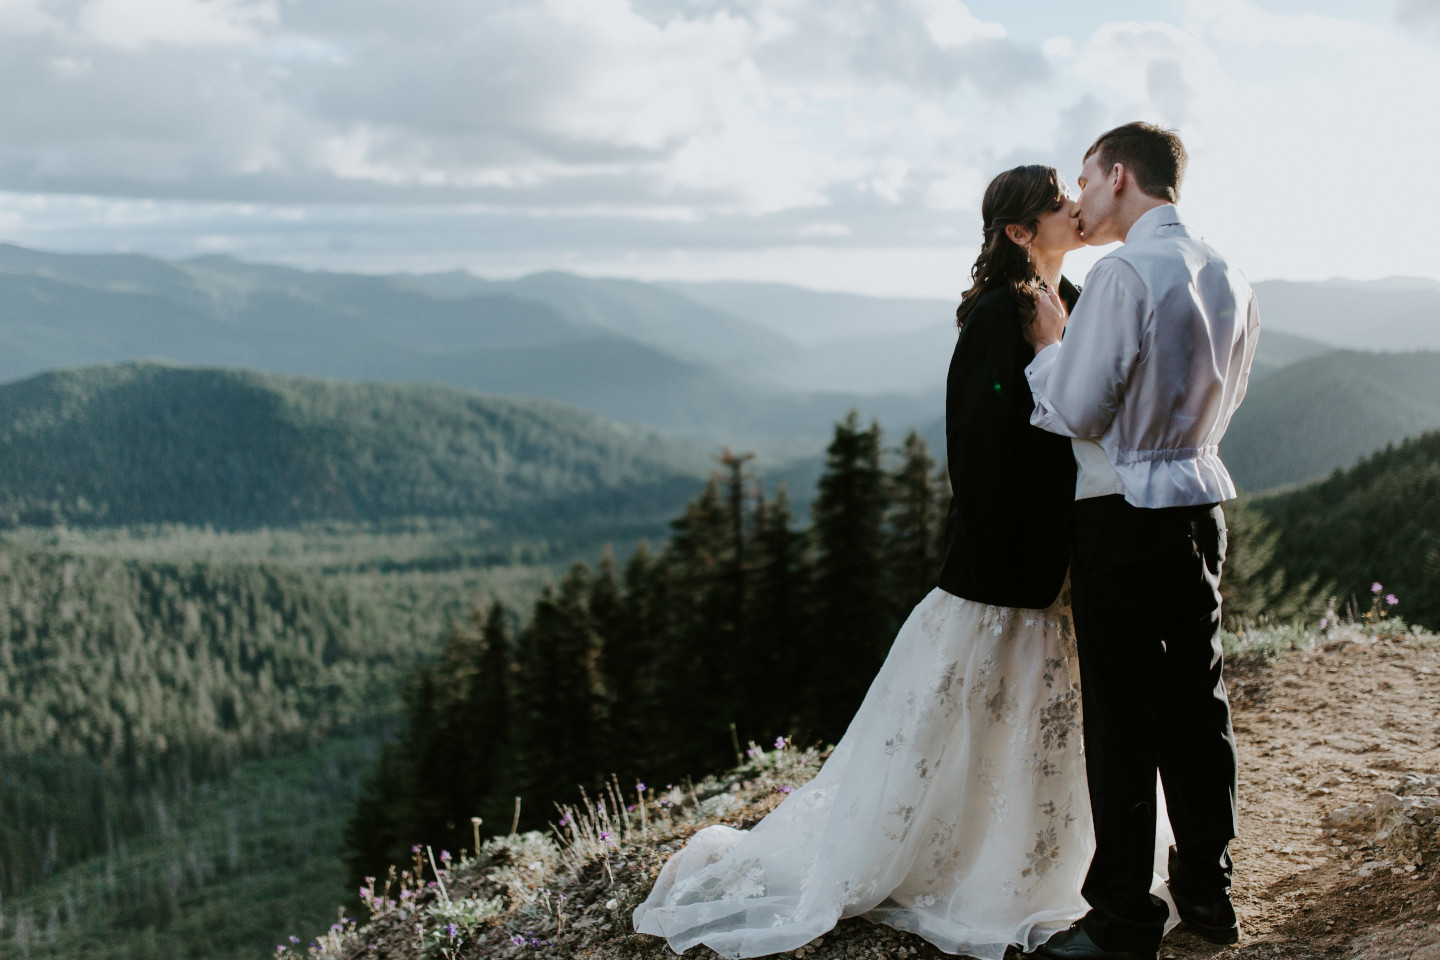 Ryan gives Moira his jacket near a view of the treeline near Mount Hood. Adventure elopement wedding shoot by Sienna Plus Josh.